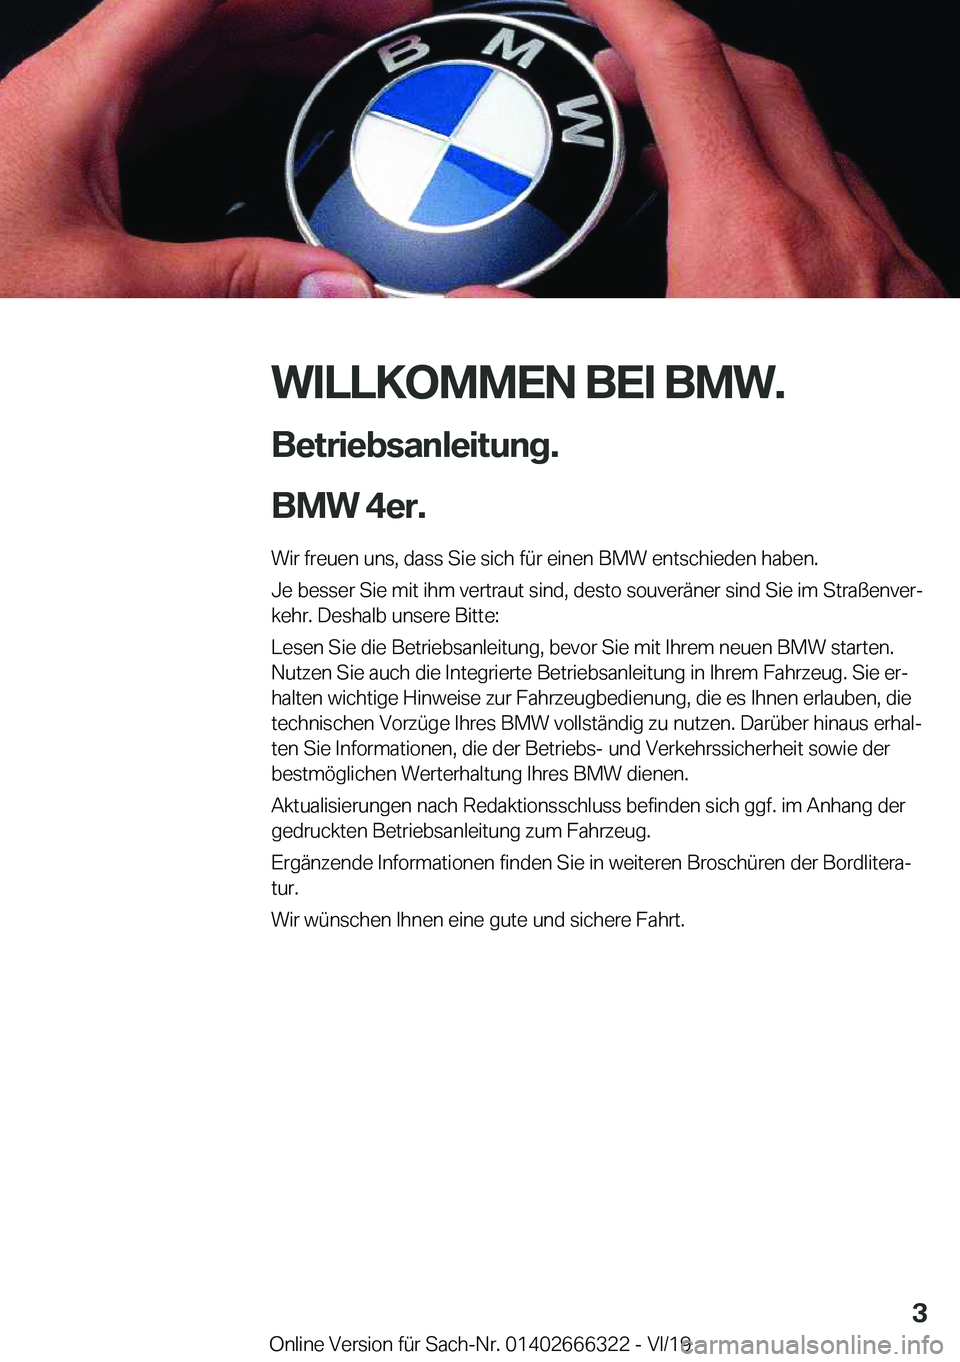 BMW 4 SERIES COUPE 2020  Betriebsanleitungen (in German) �W�I�L�L�K�O�M�M�E�N��B�E�I��B�M�W�.�B�e�t�r�i�e�b�s�a�n�l�e�i�t�u�n�g�.
�B�M�W��4�e�r�.�
�W�i�r��f�r�e�u�e�n��u�n�s�,��d�a�s�s��S�i�e��s�i�c�h��f�